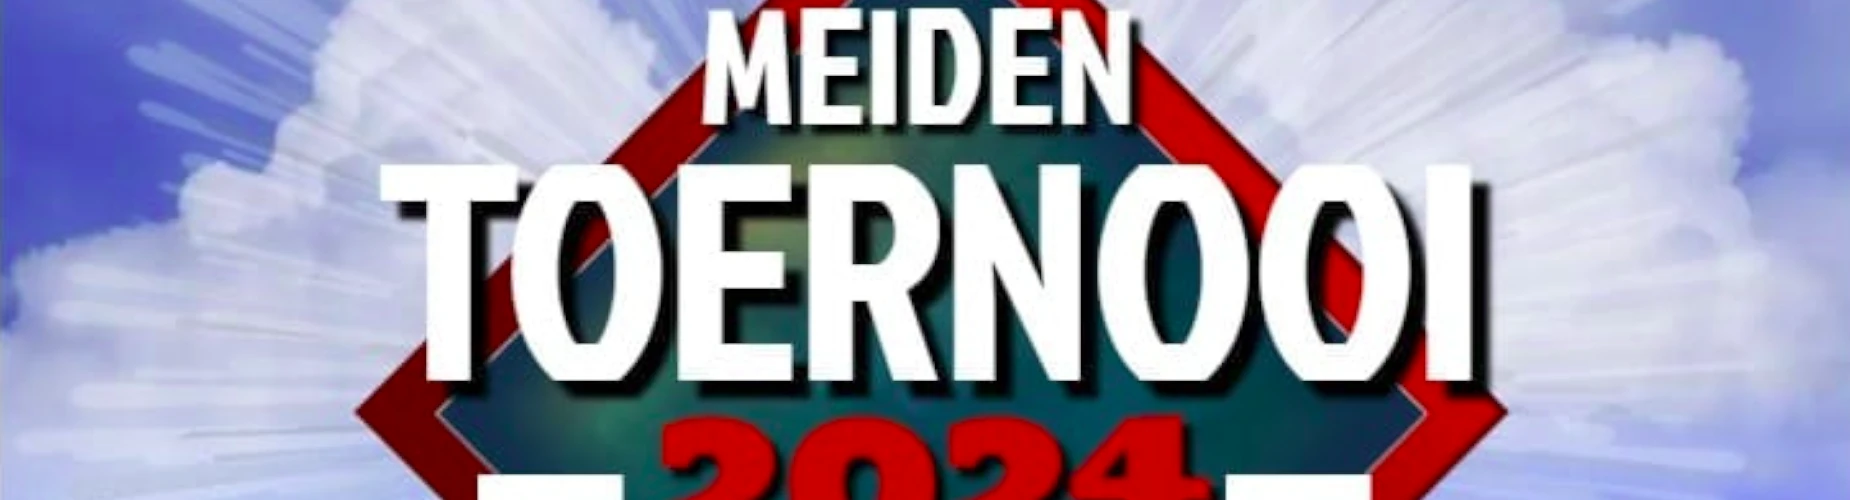 Banner - MO10 - Meiden Toernooi - VV Terneuzen - Terneuzen